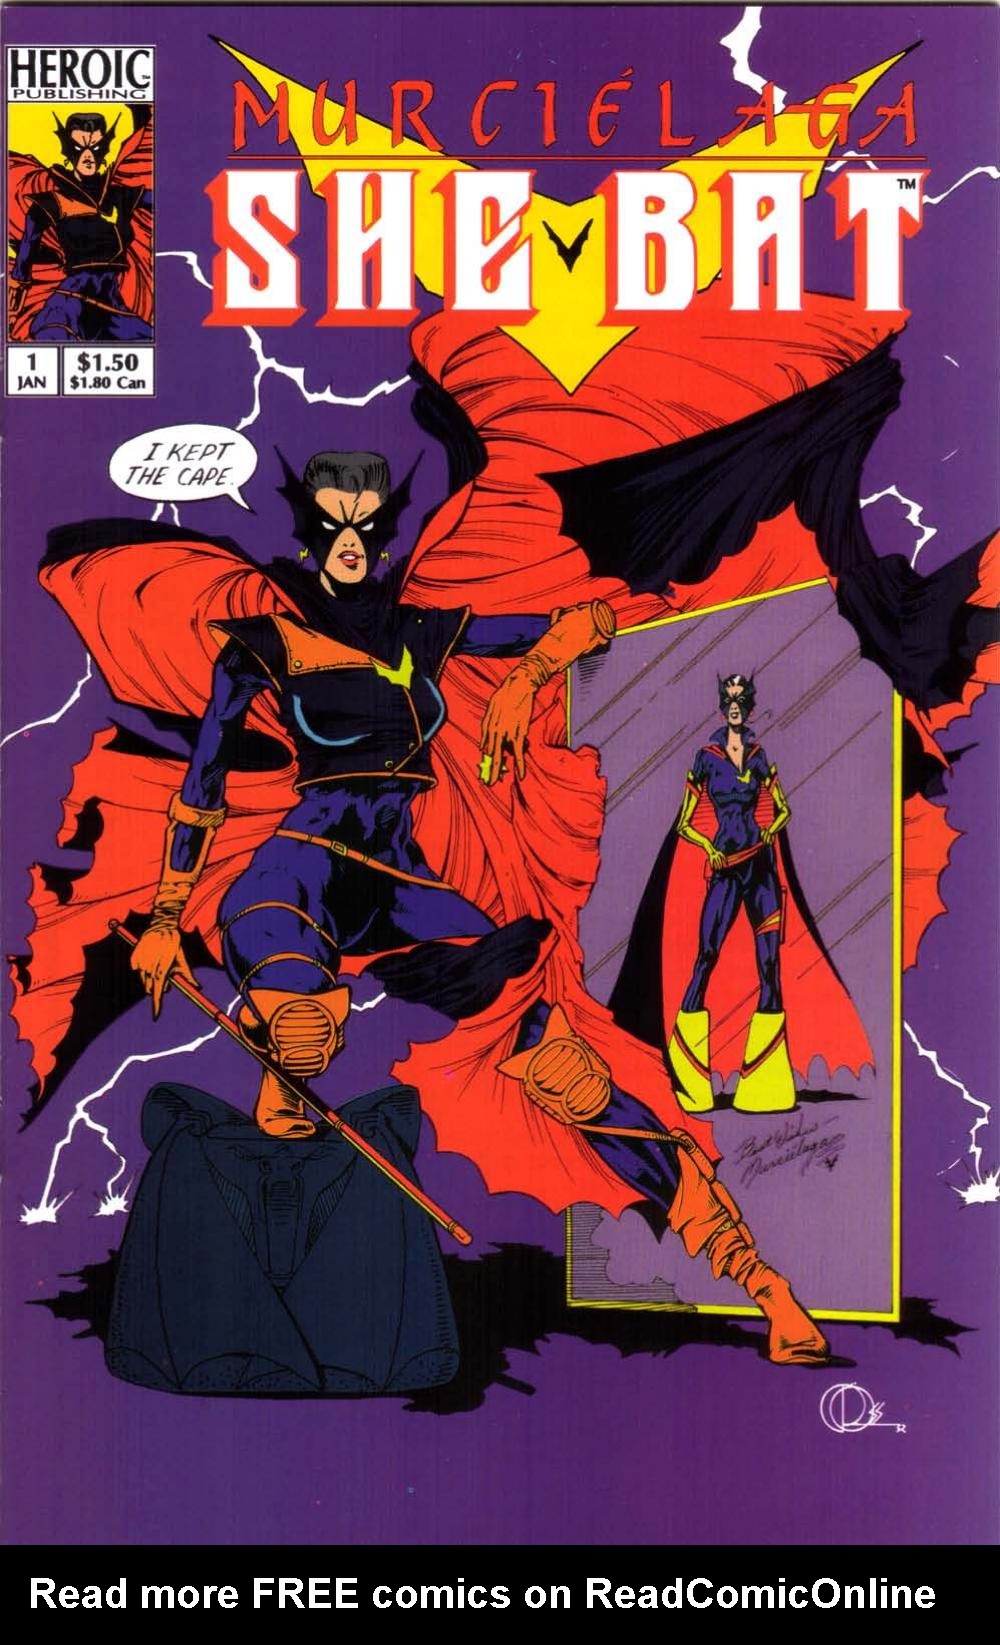 Read online Murciélaga She-Bat comic -  Issue #1 - 1